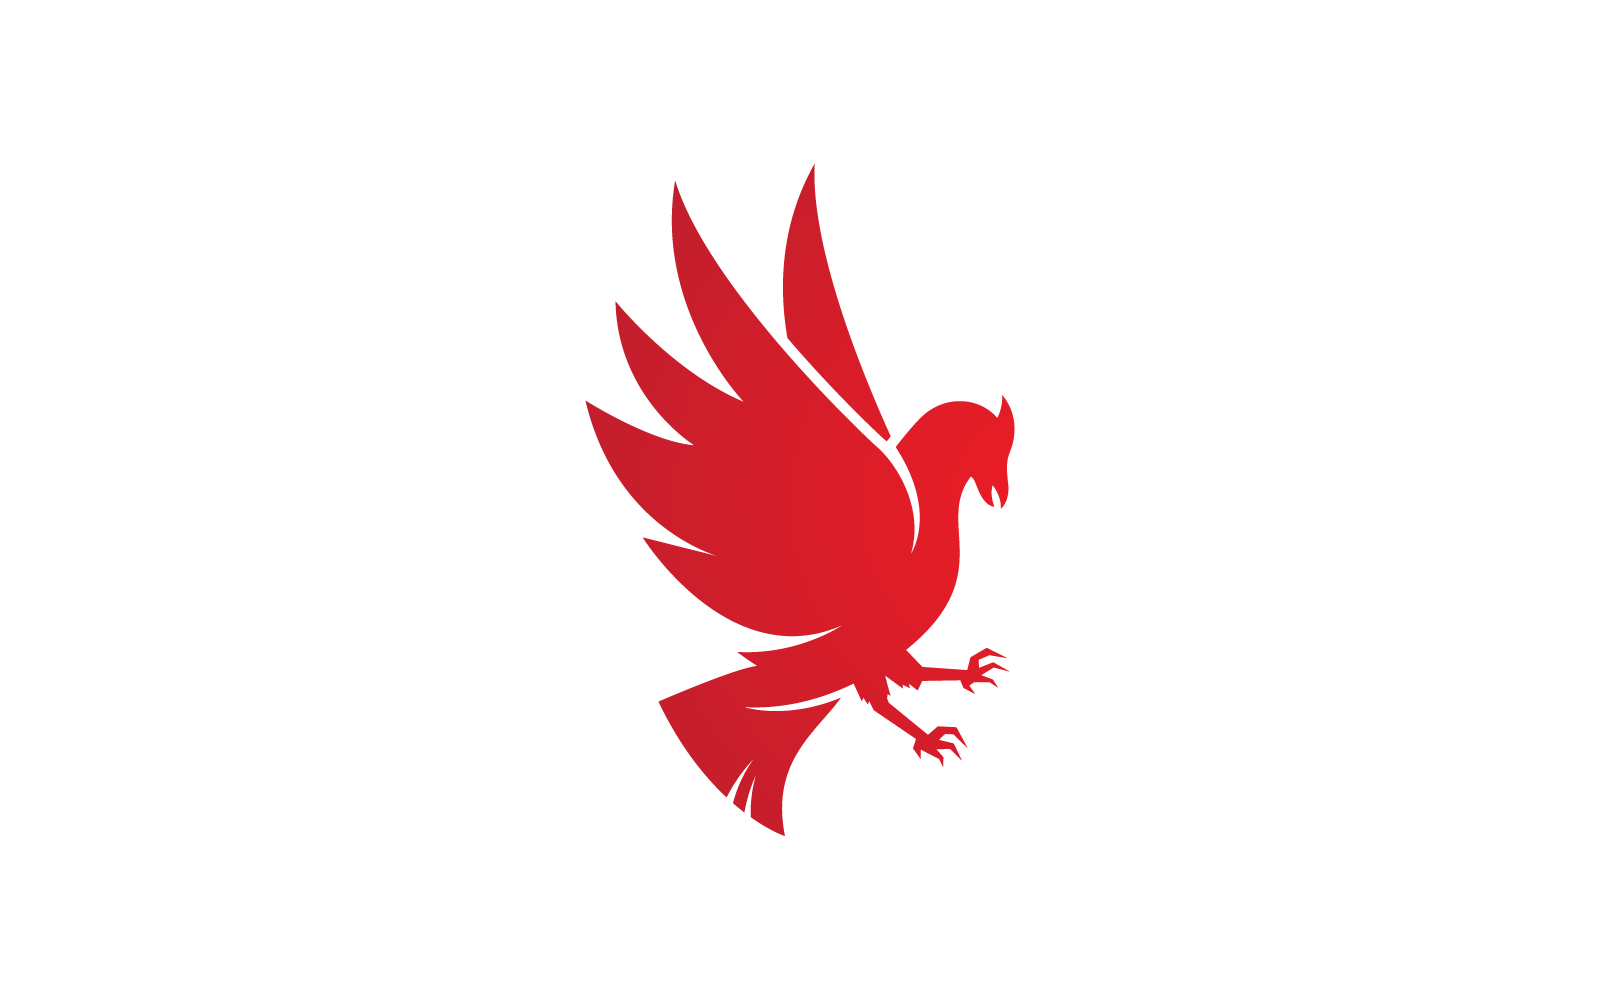 Falcon eagle bird logo illustration flat design